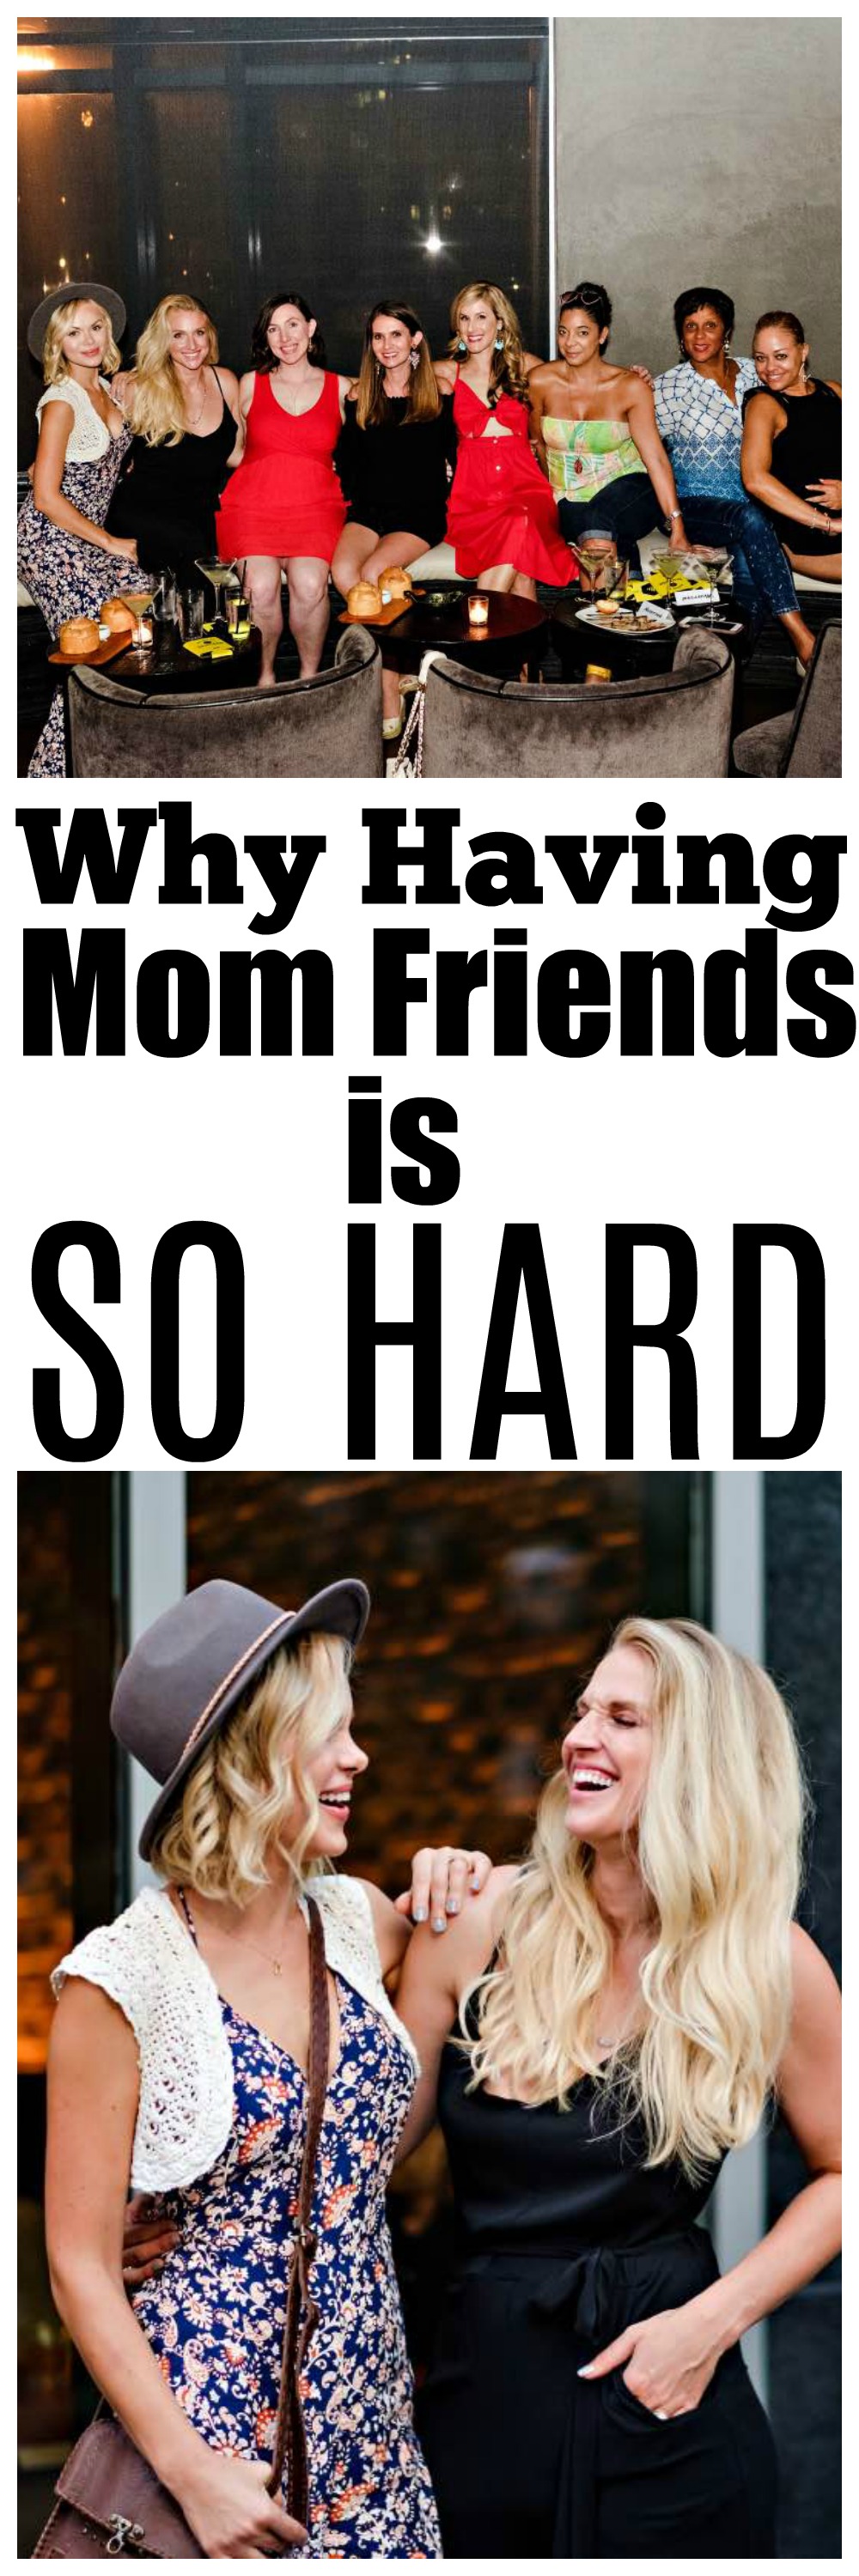 Why Making Mom Friends is So Hard by Atlanta mom blogger Happily Hughes